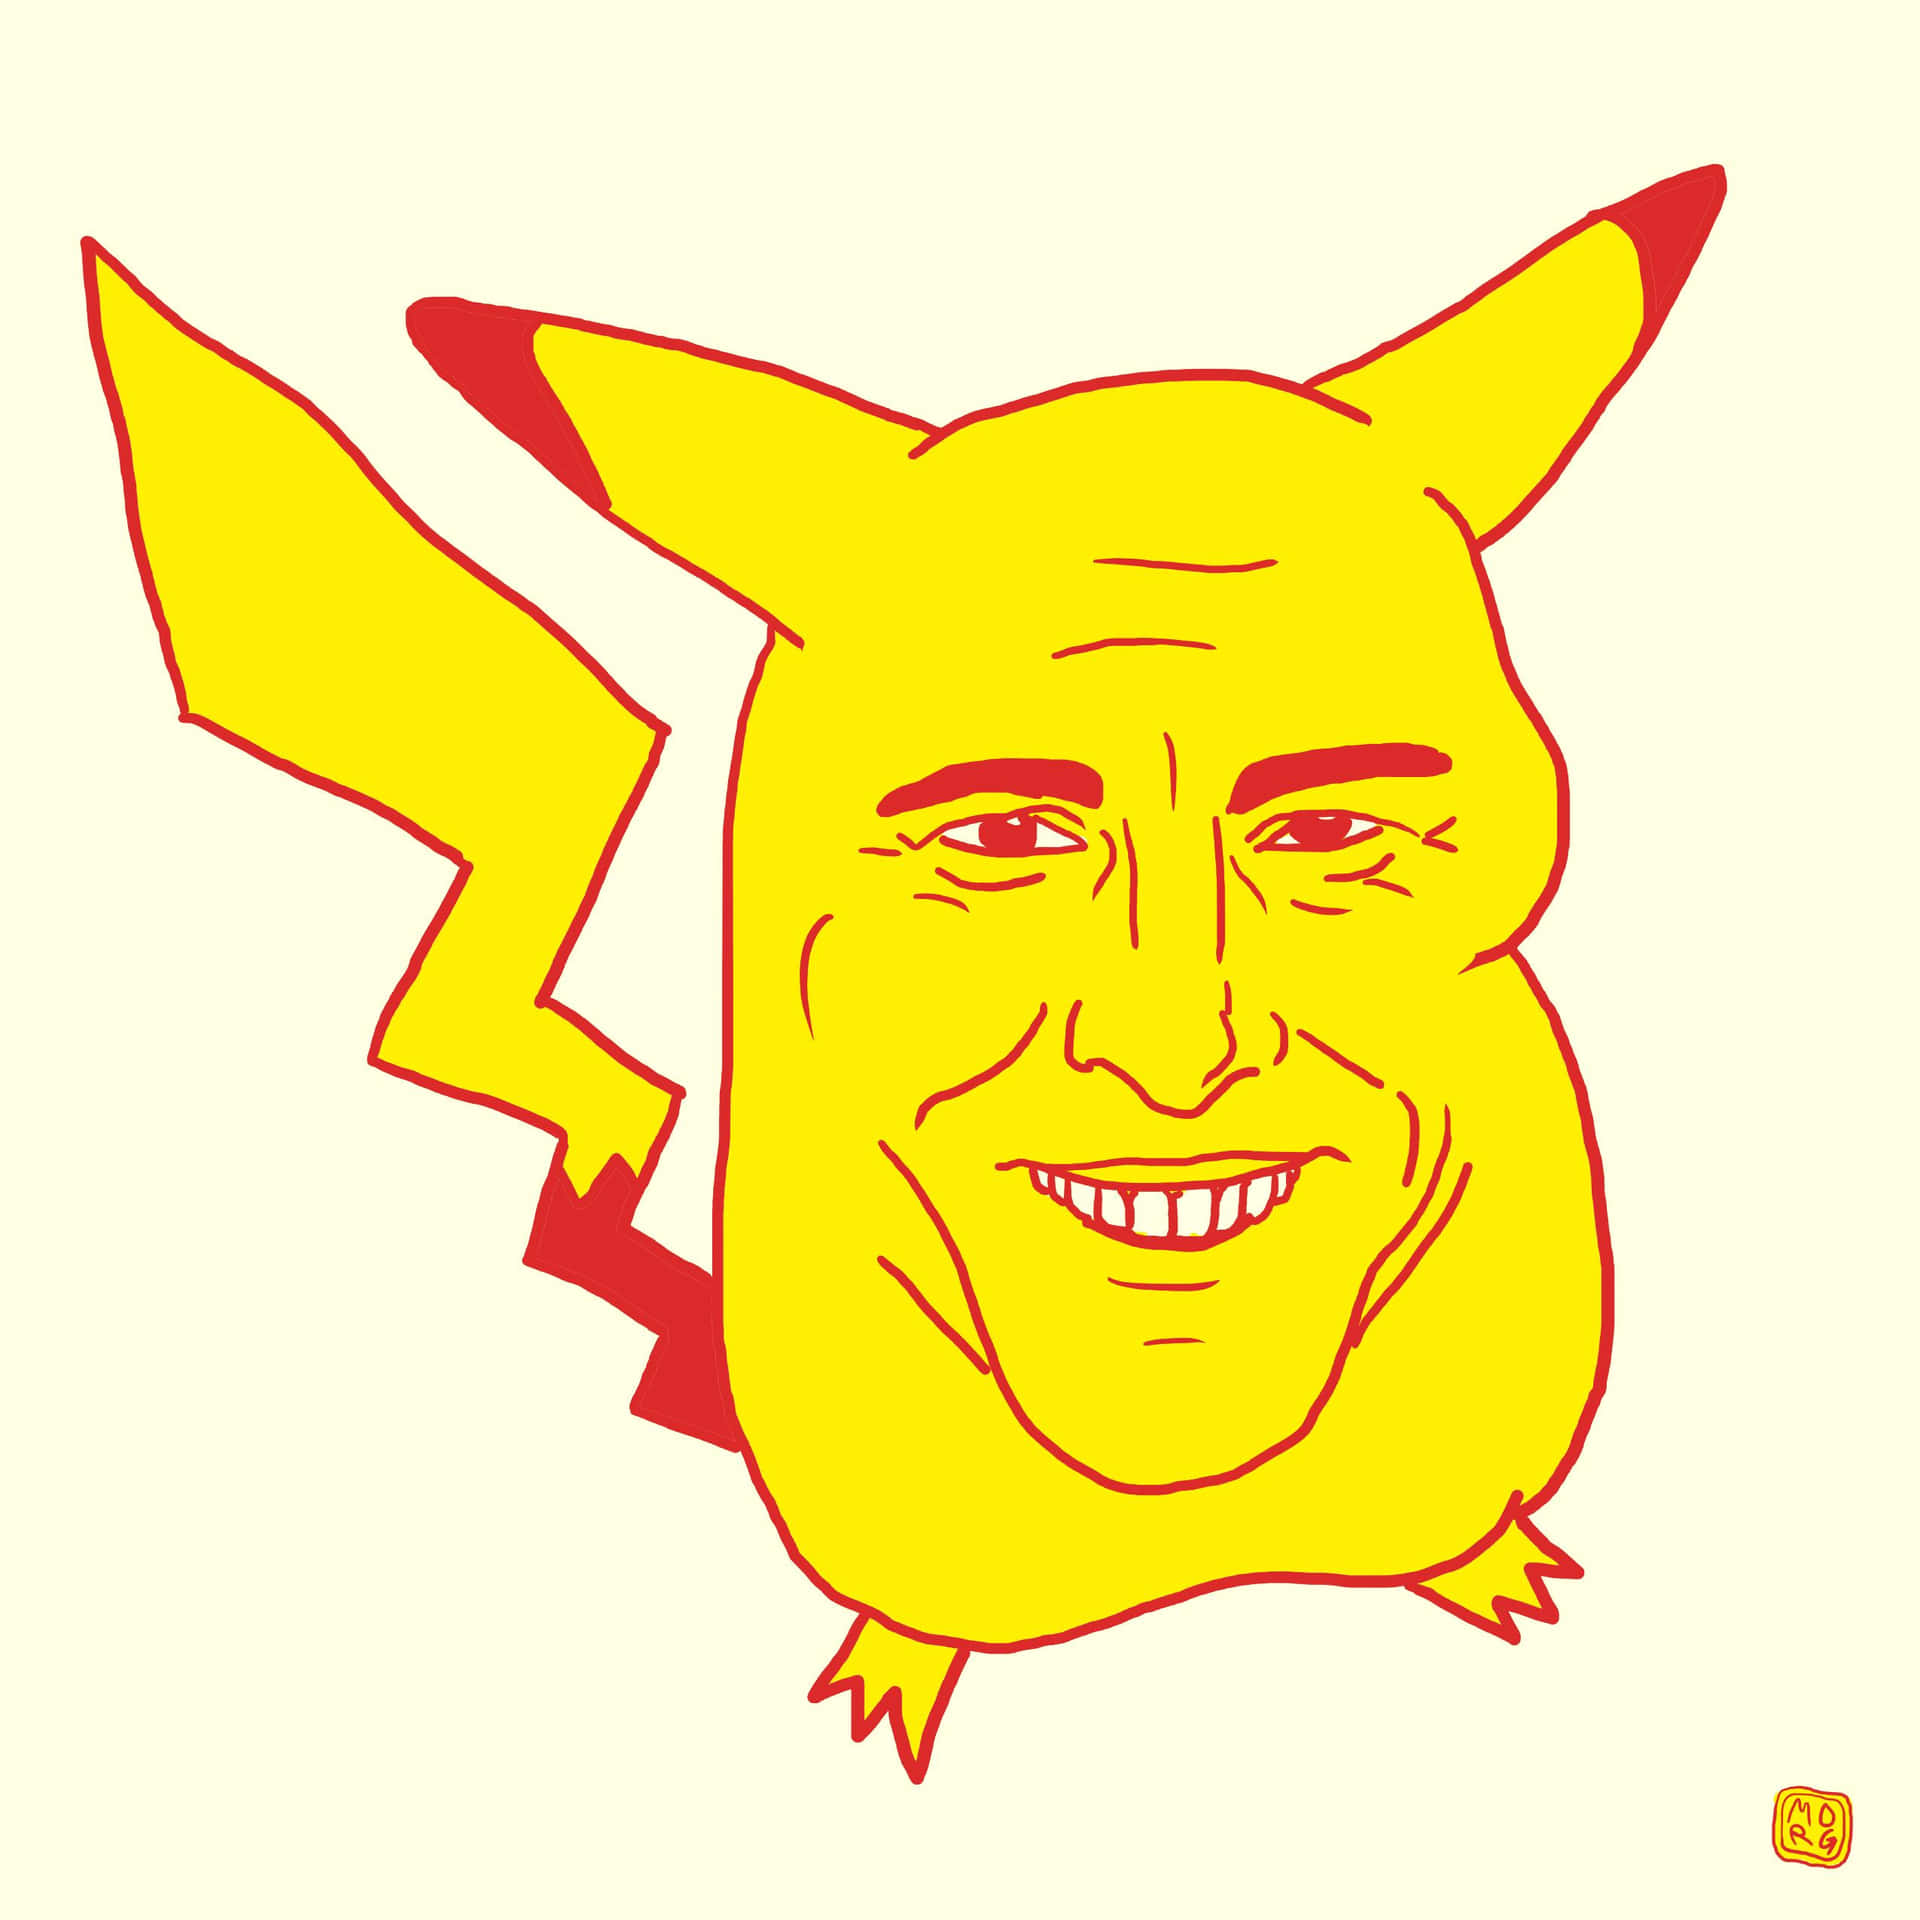 Enteckning Av En Pikachu Med Ett Leende.